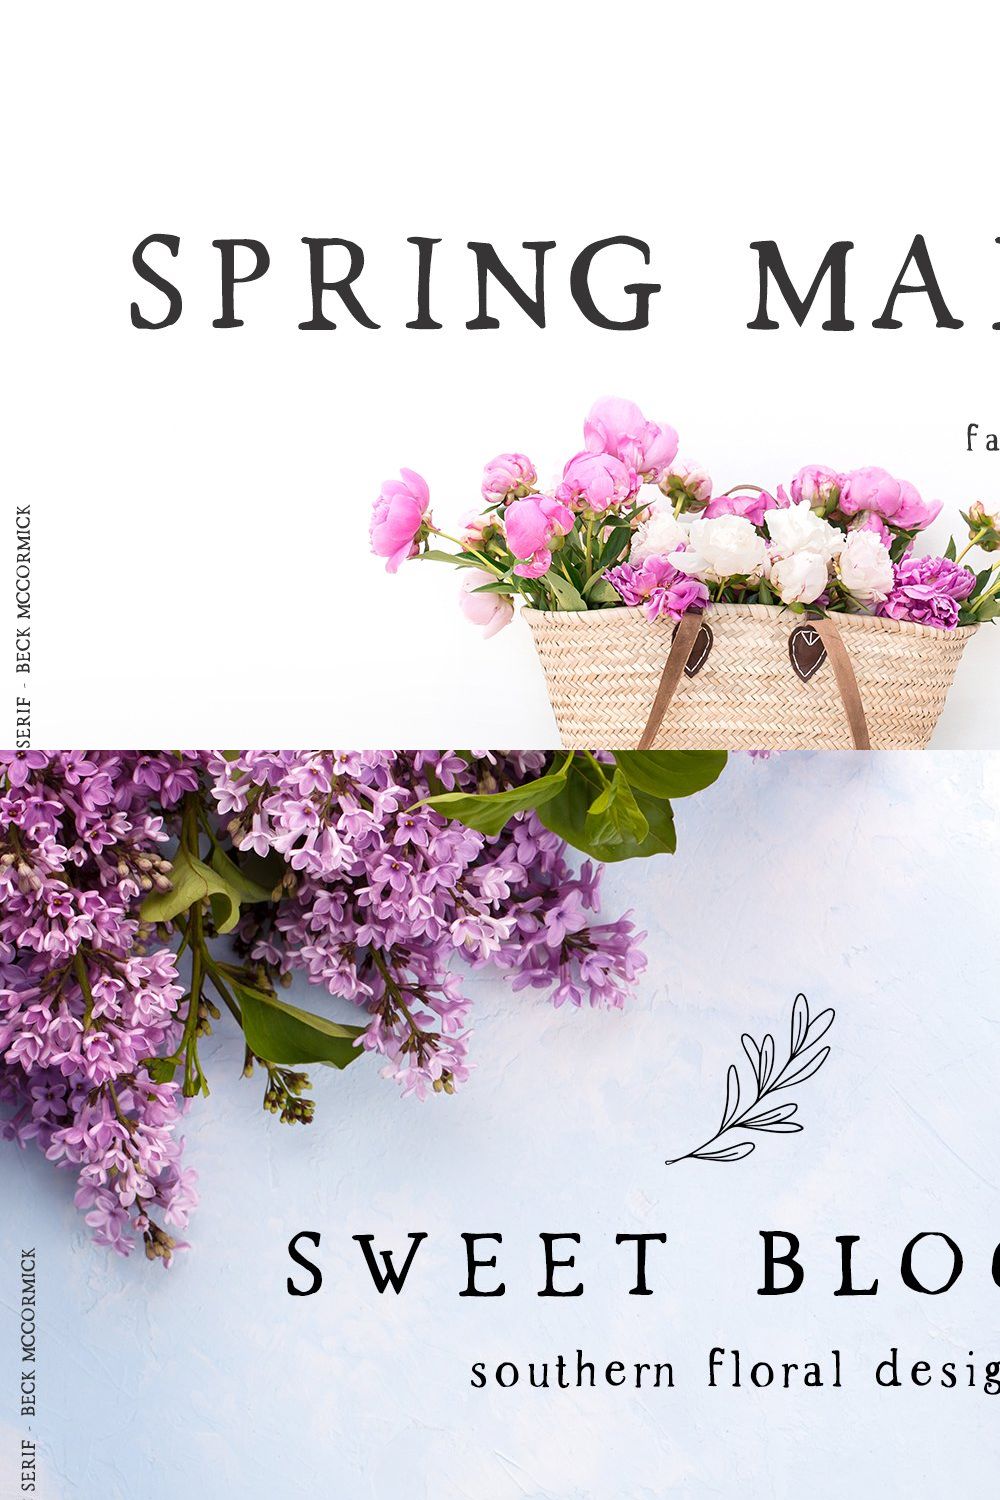 Spring Market - Rustic Font pinterest preview image.